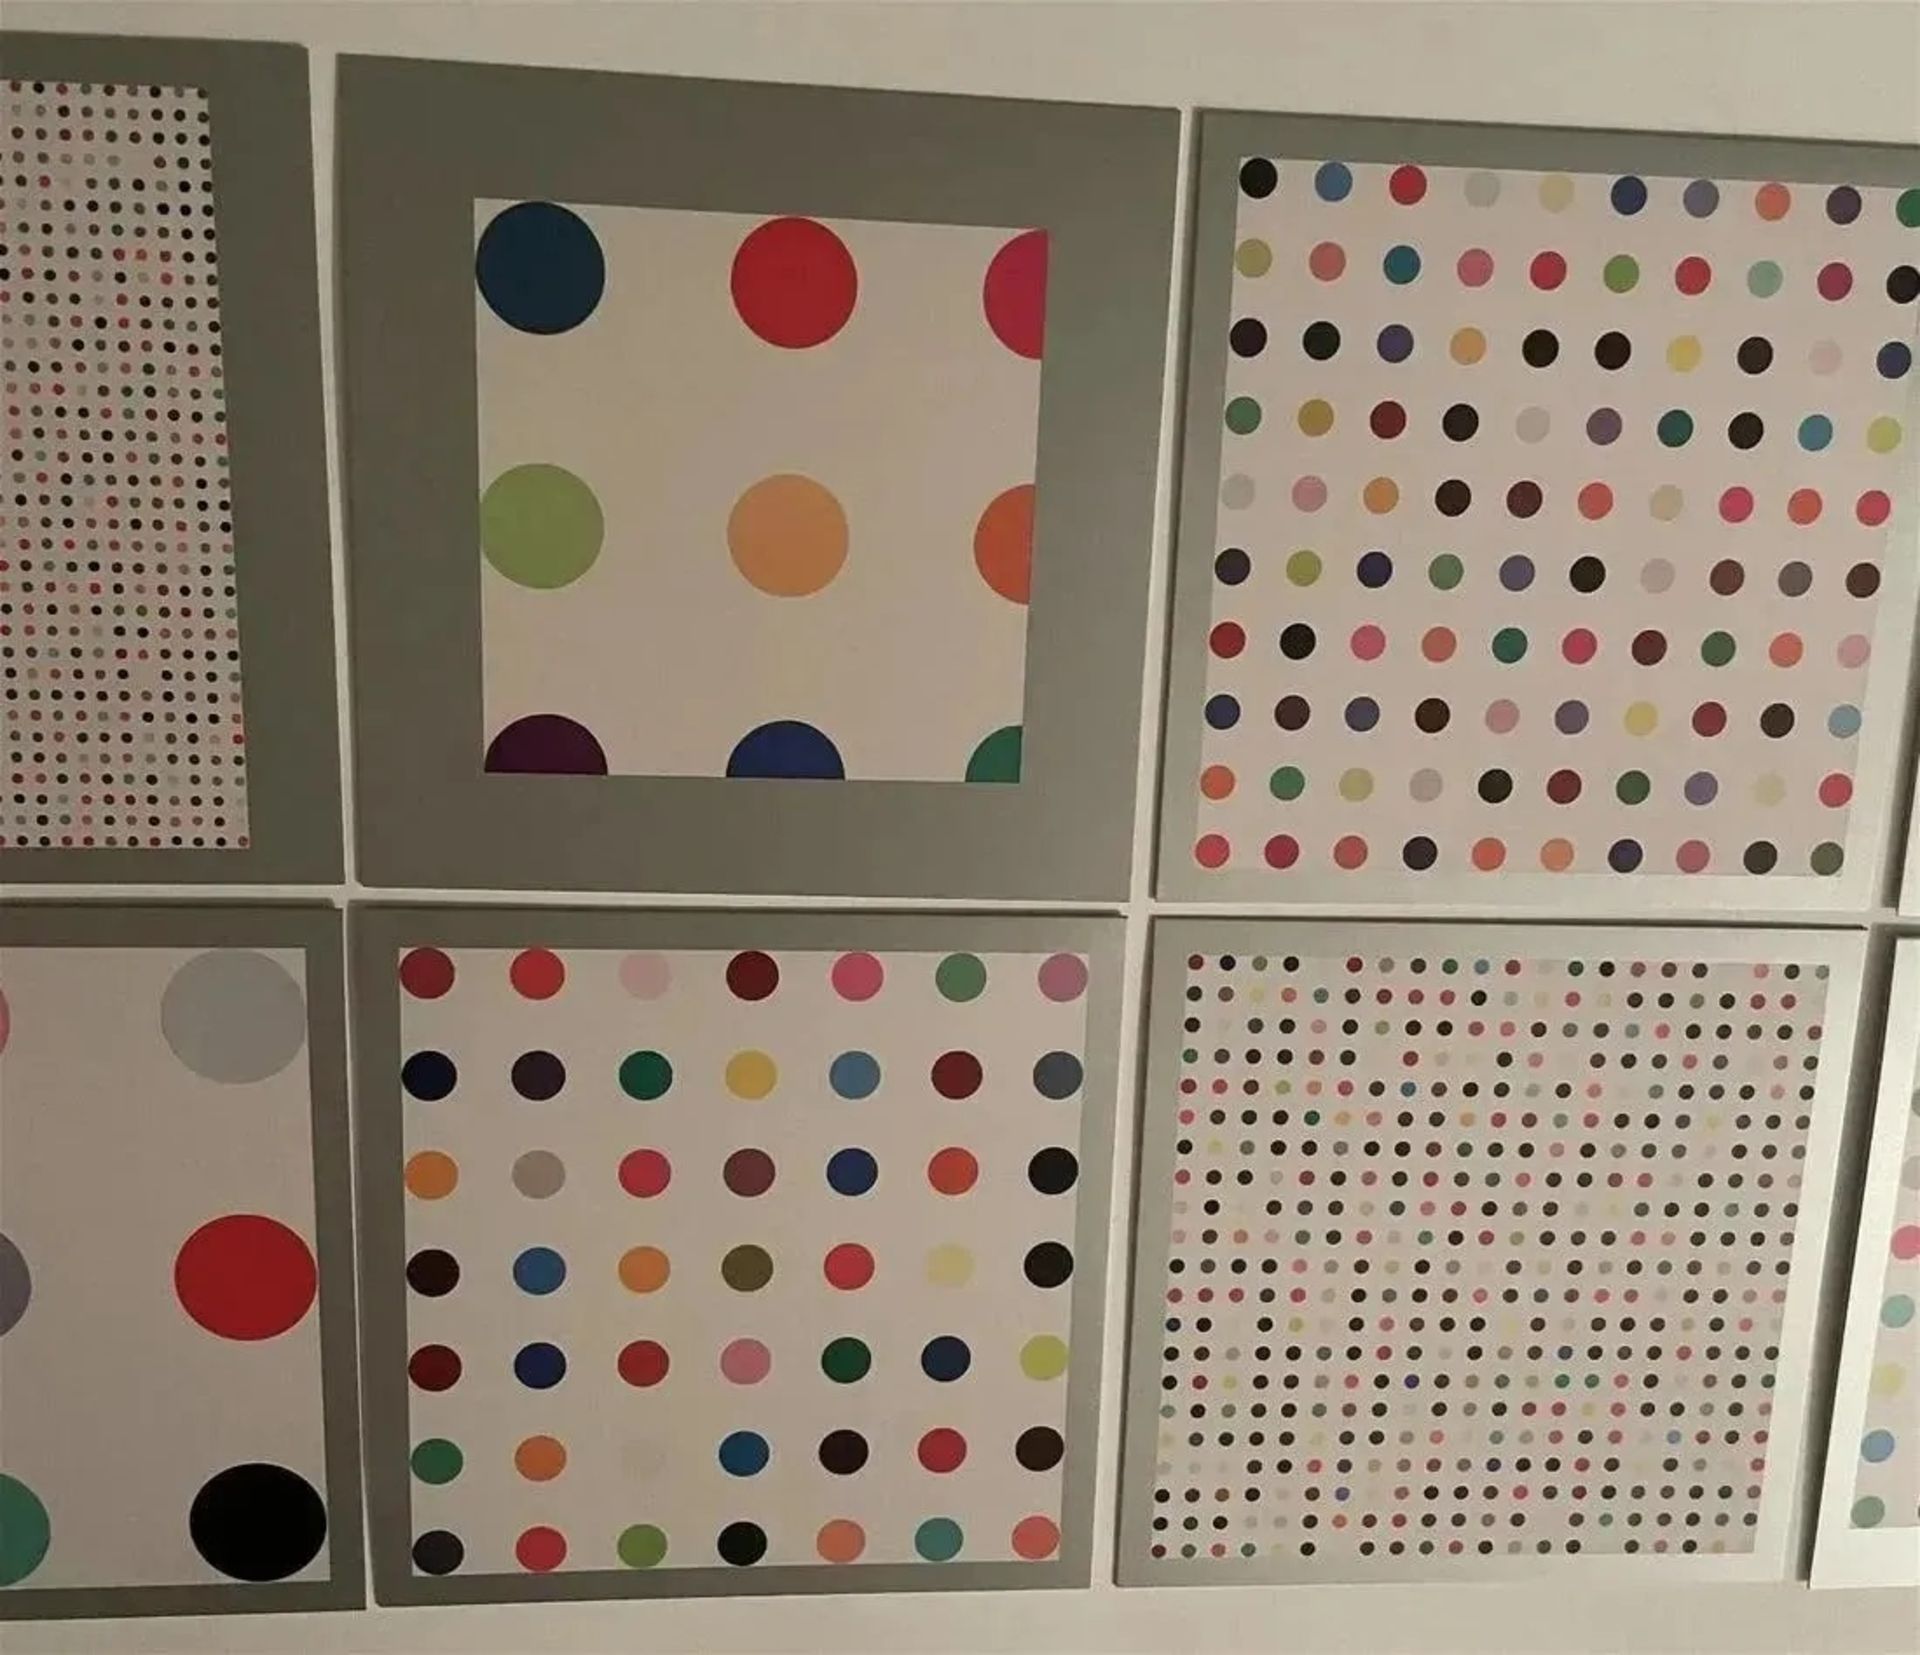 Damien Hirst lot of 10 "Spot" Prints